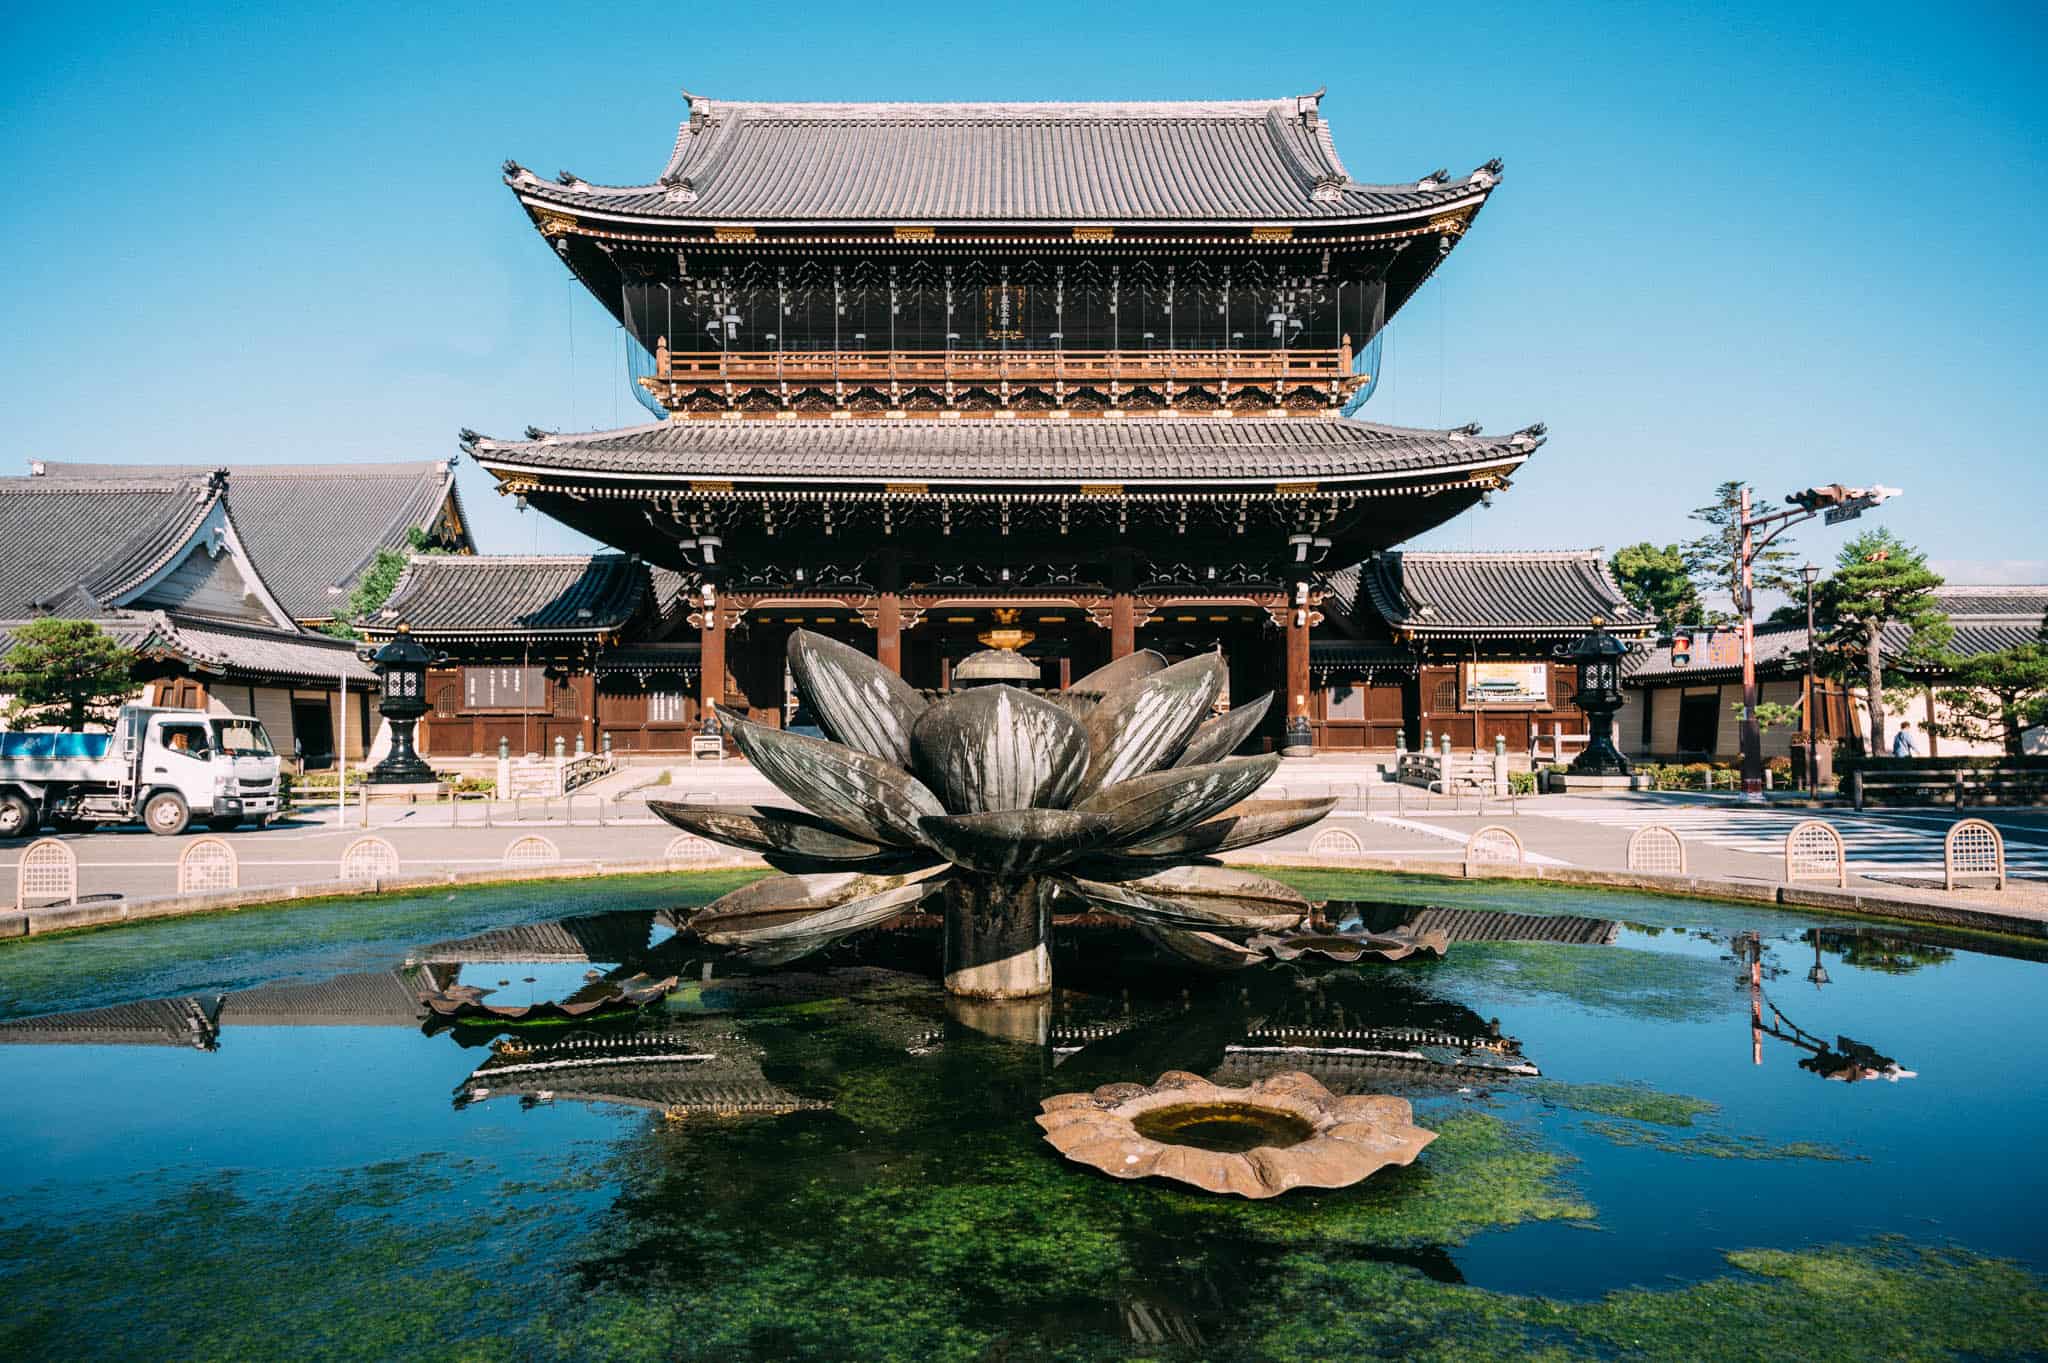 higashi-honganji temple and fountain